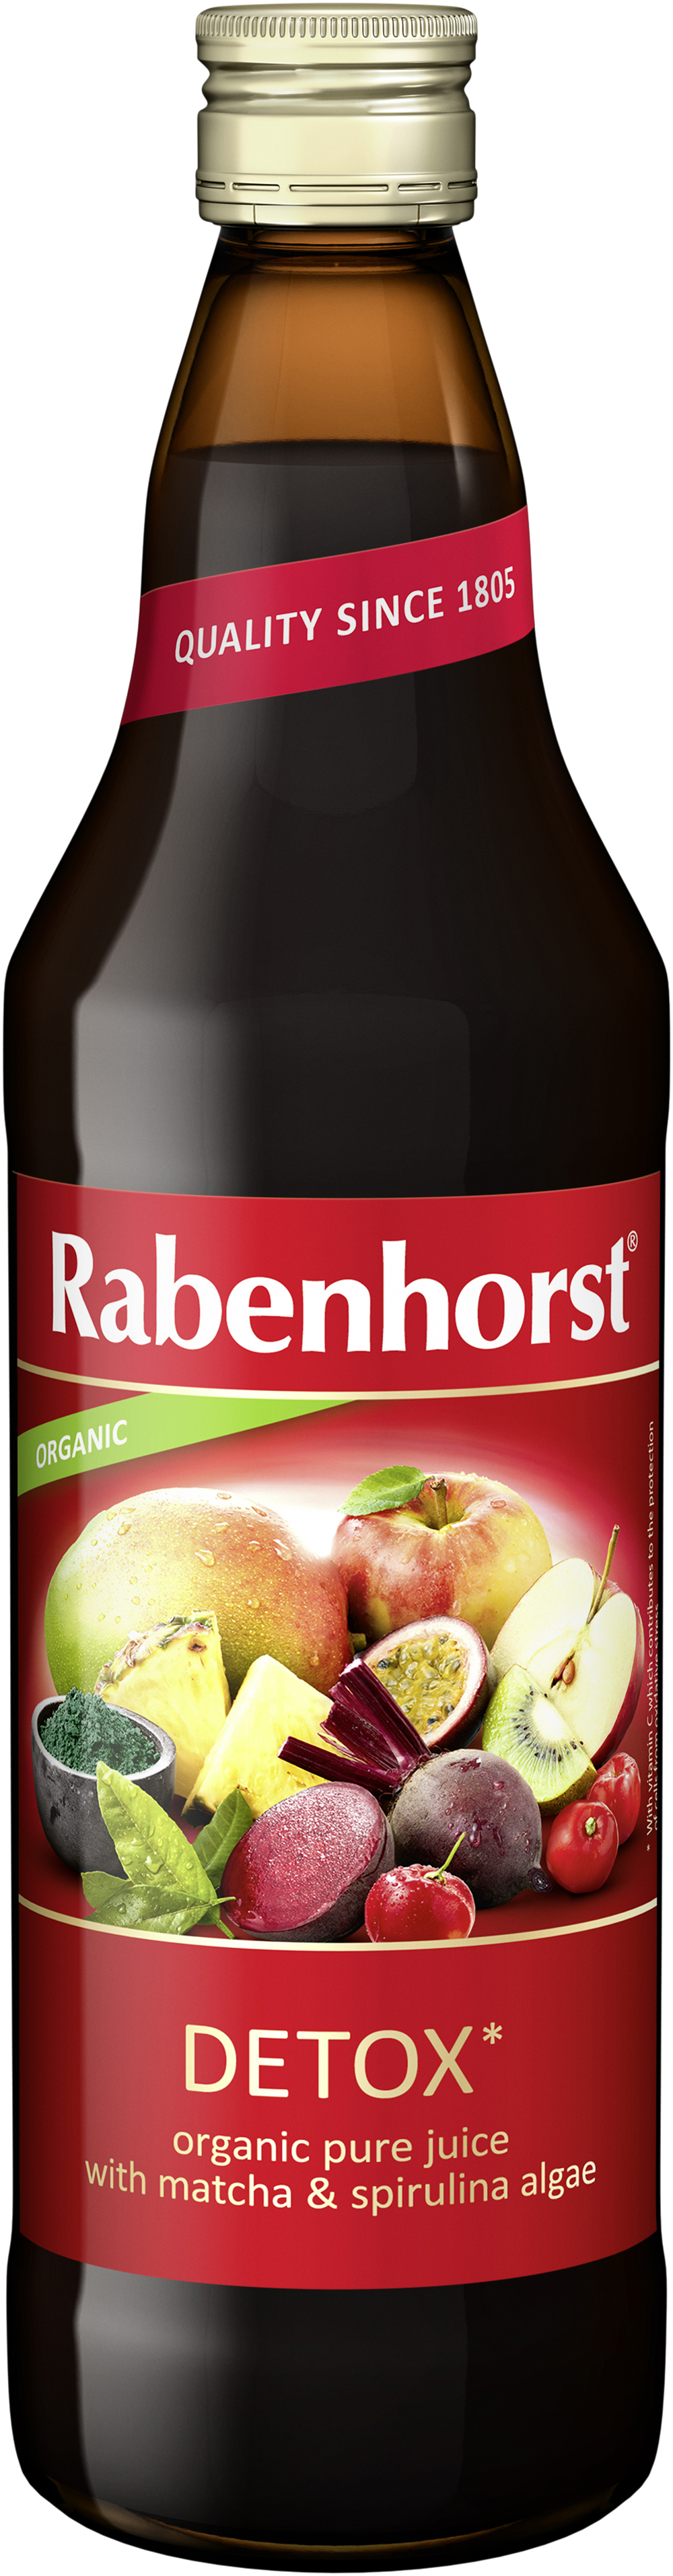 Rabenhorst Detox